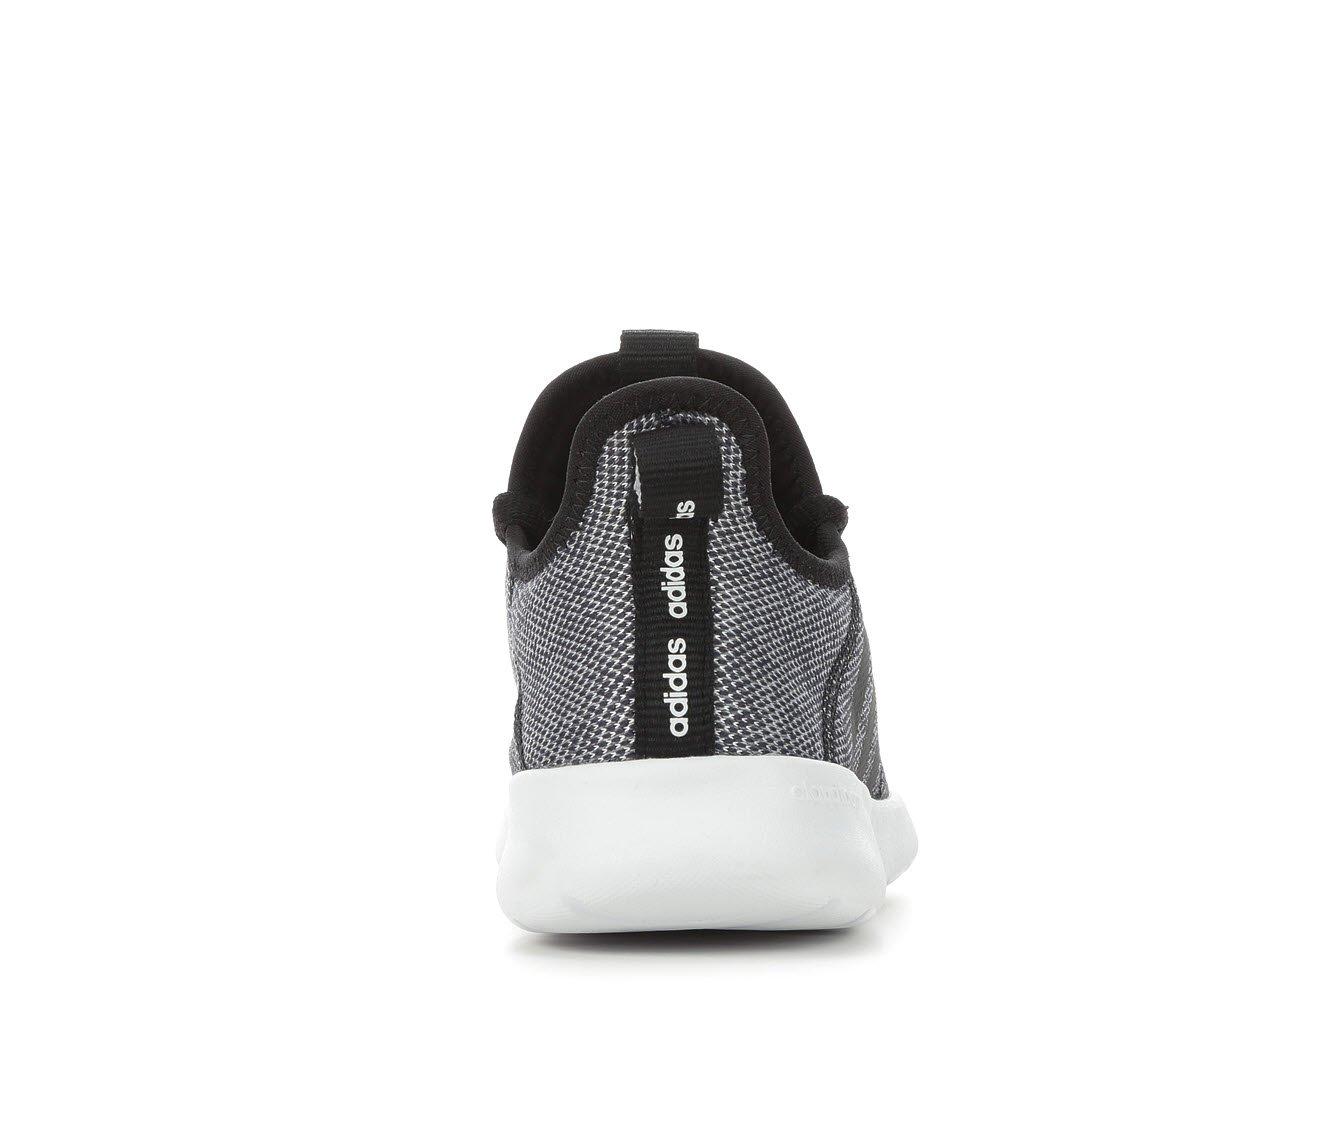 Adidas Cloudfoam Pure Sustainable Slip-On Sne...